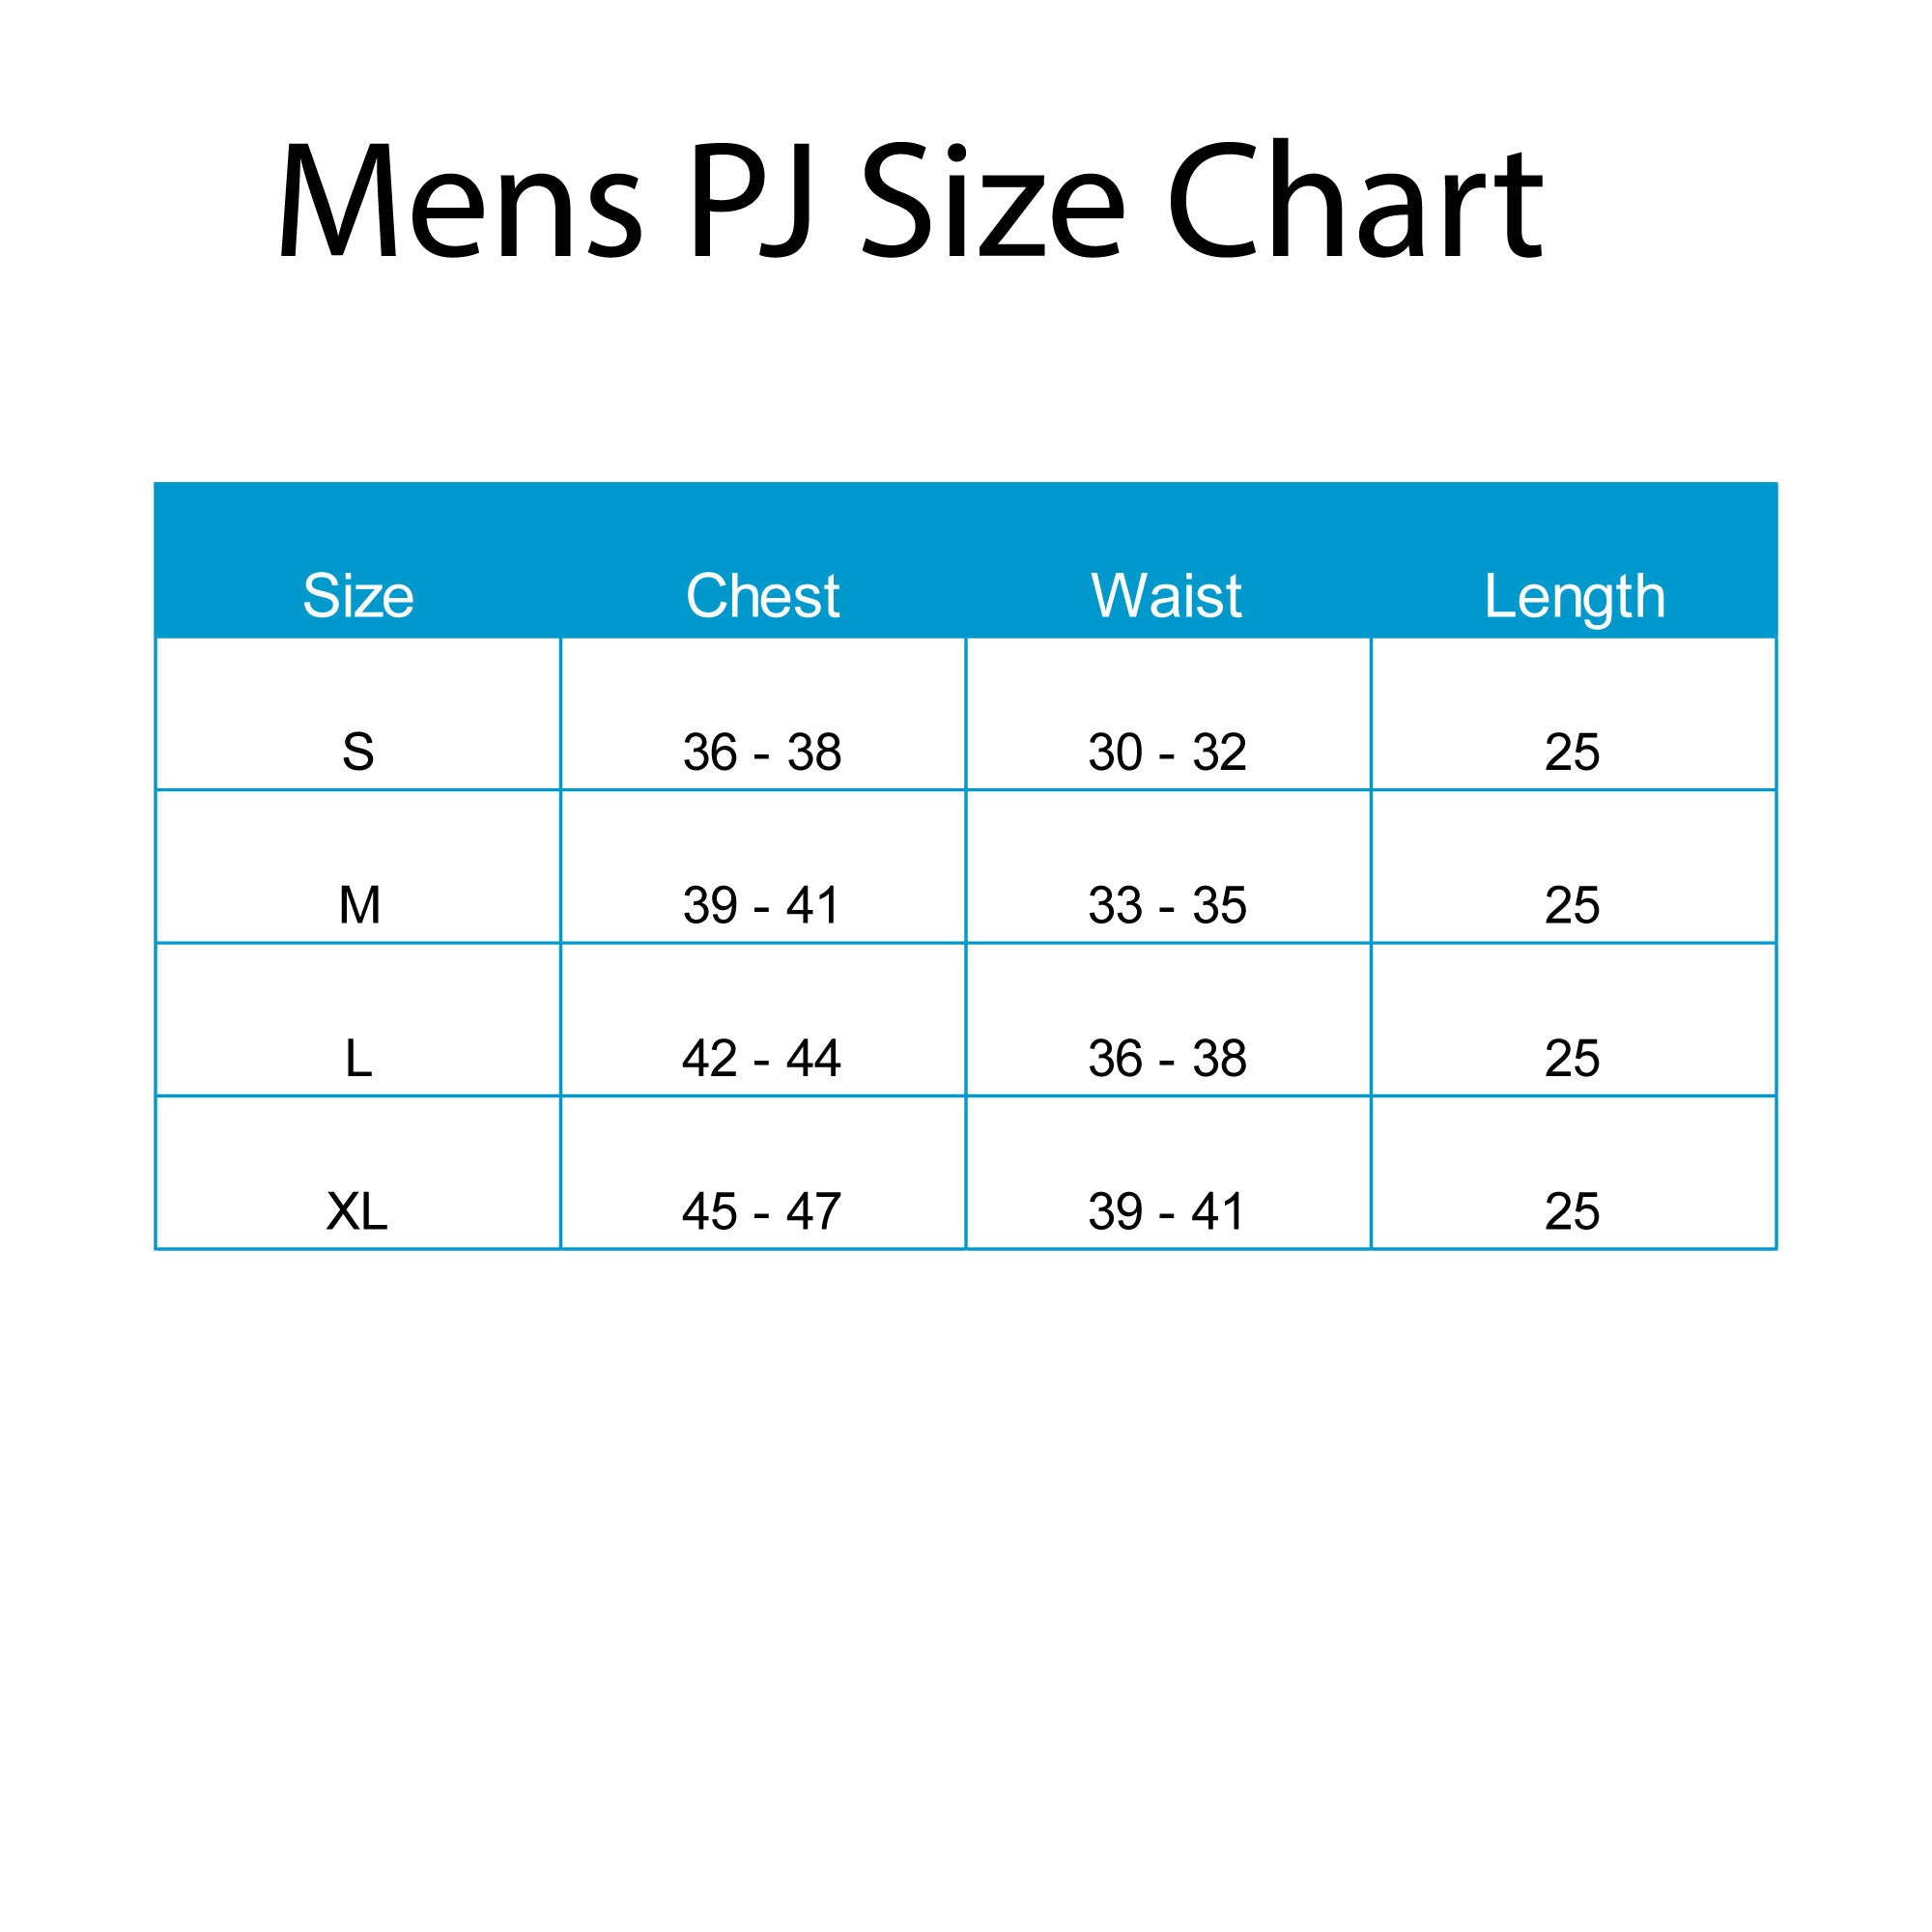 Mens PJ Size Chart